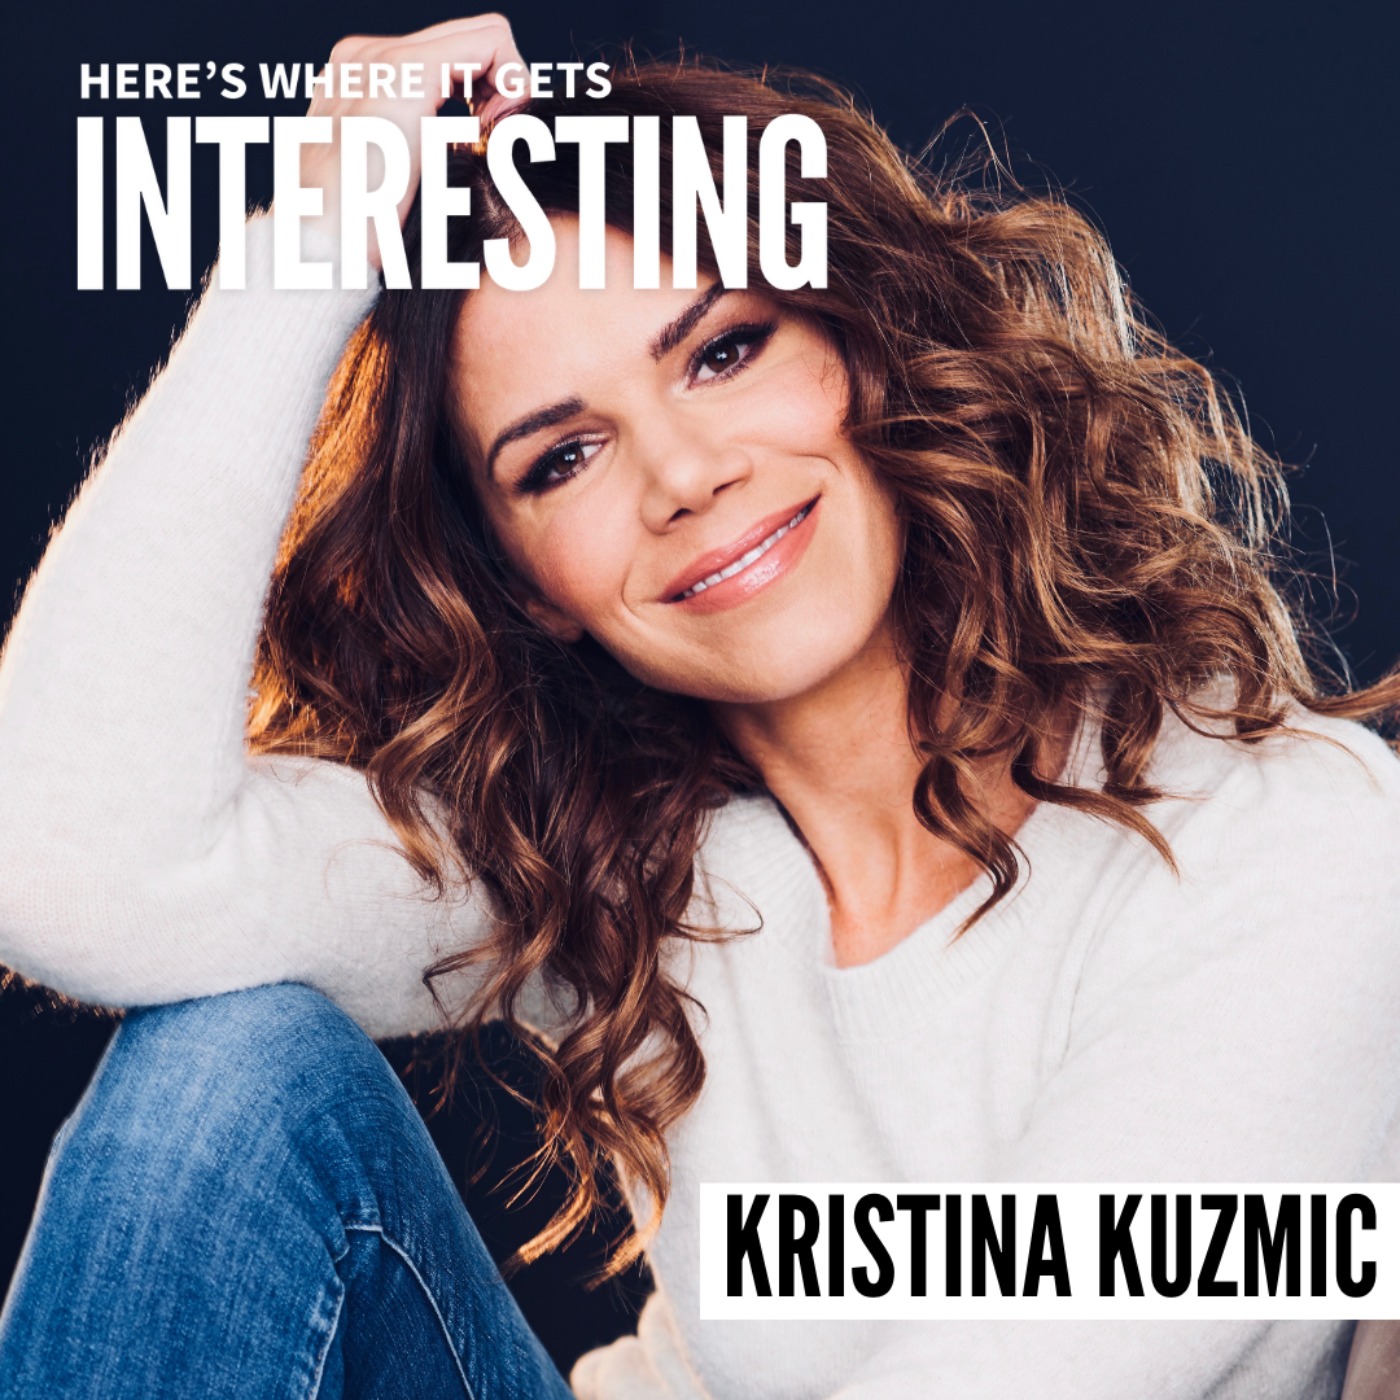 Choosing Hope and Humor with Kristina Kuzmic